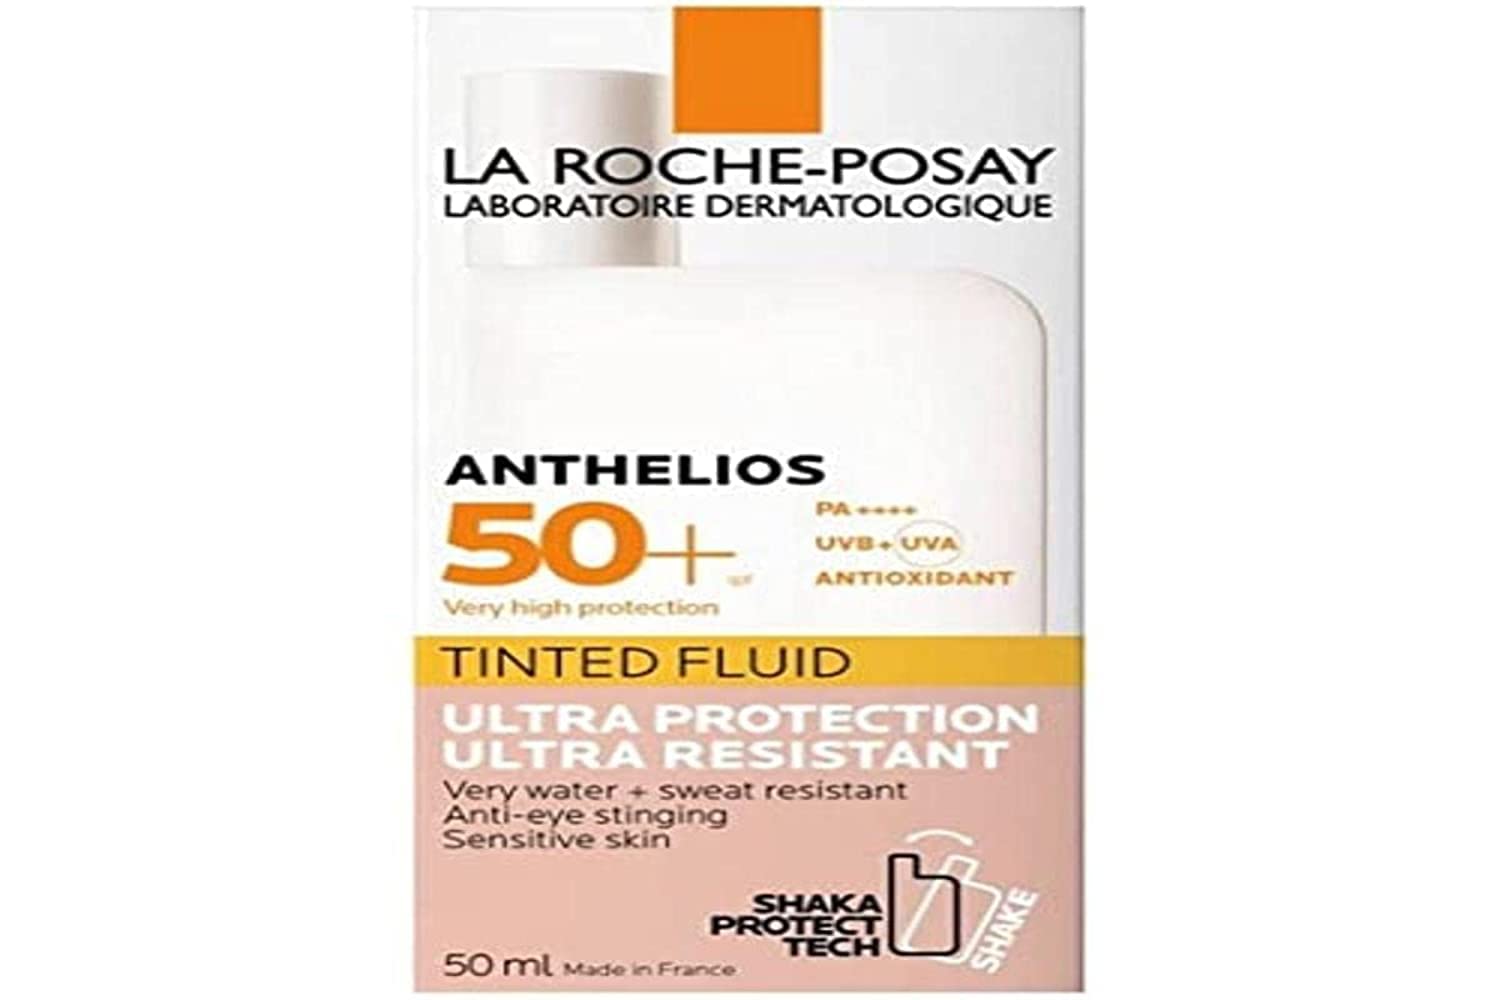 La Roche-Posay Anthelios Shaka Tinted Liquid SPF 50+ 50ml